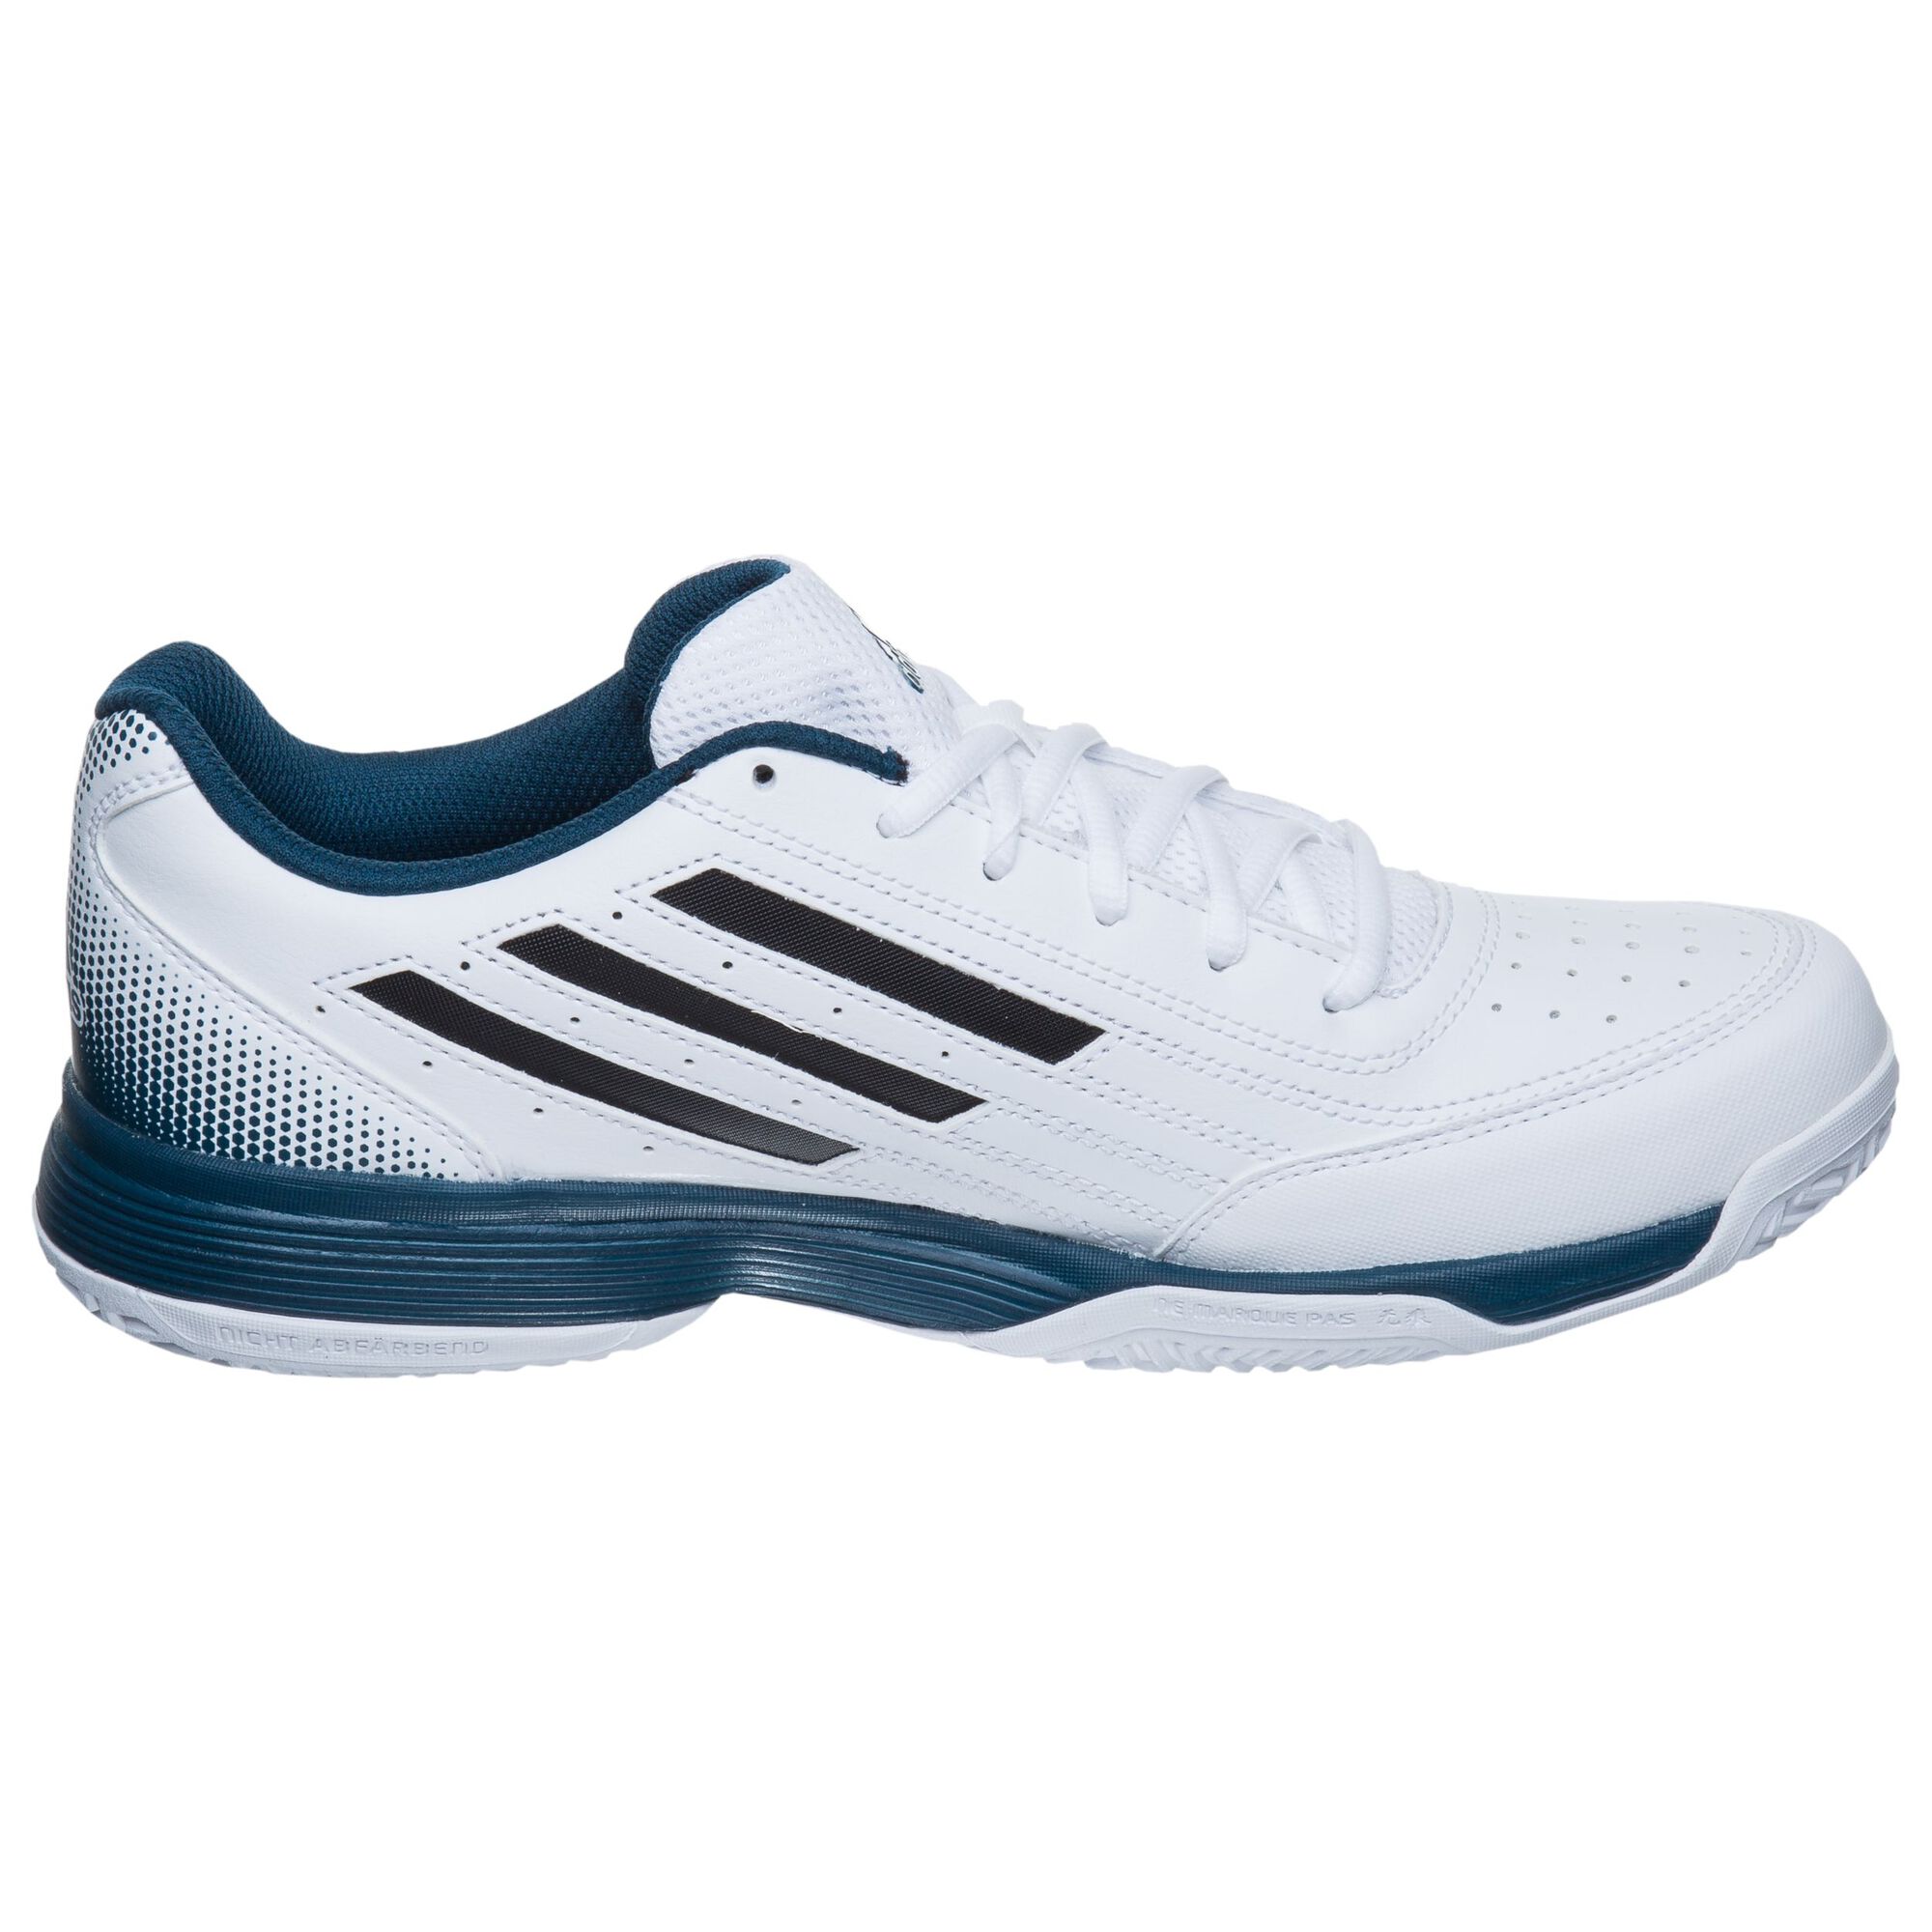 revolutie Kampioenschap Legacy buy adidas Sonic Attack All Court Shoe Men - White, Dark Blue online |  Tennis-Point